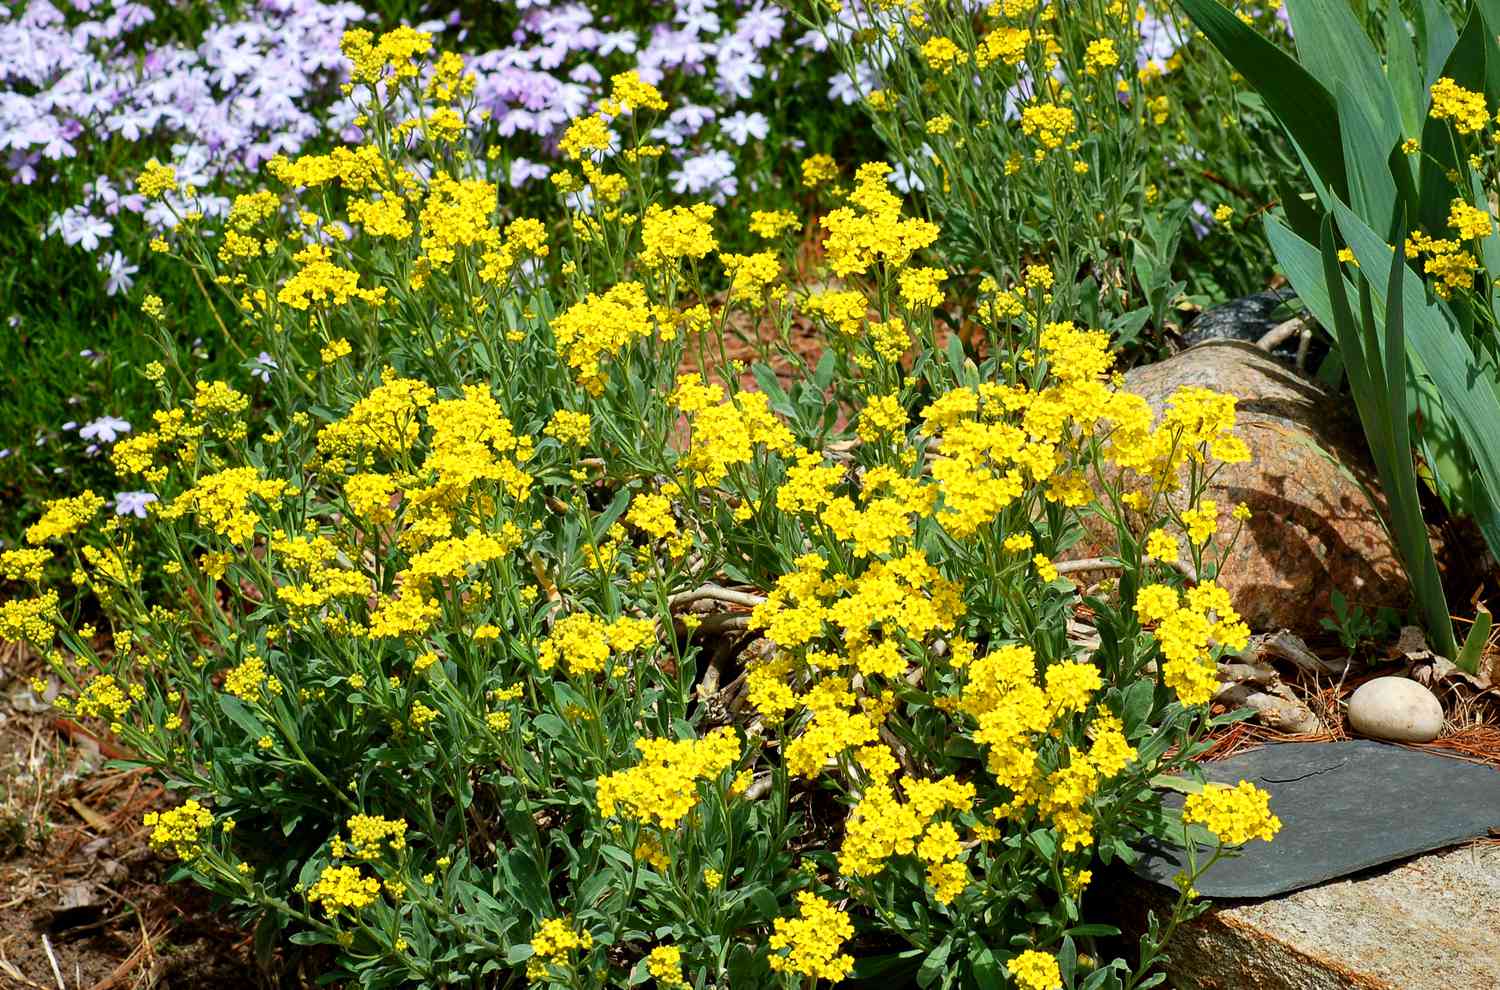 Yellow alyssum flowers amid phlox flowers and rocks.